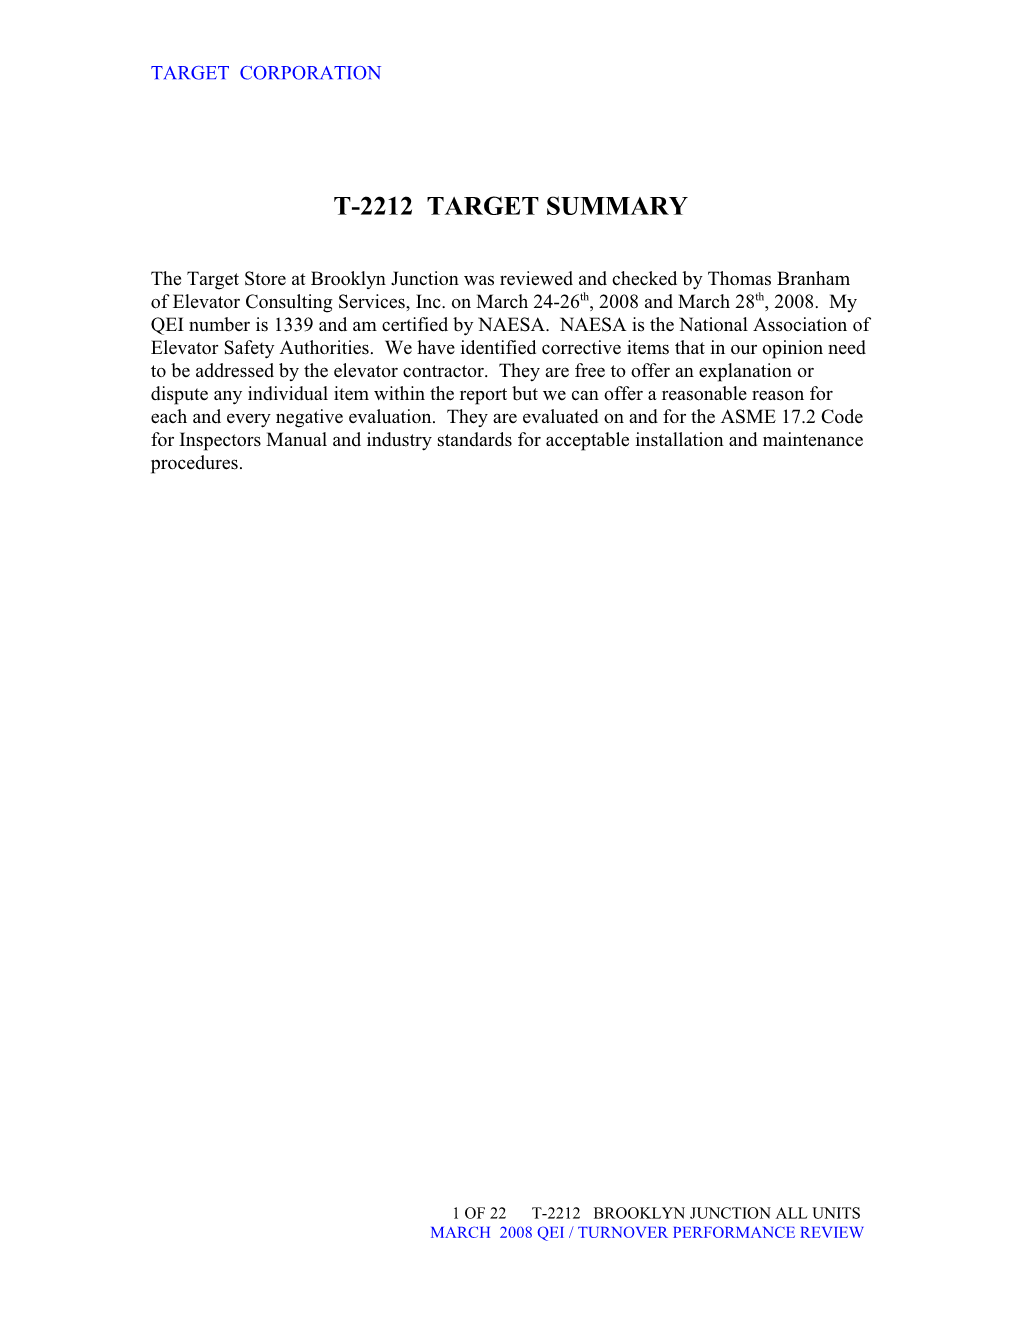 T-2212 Target Summary